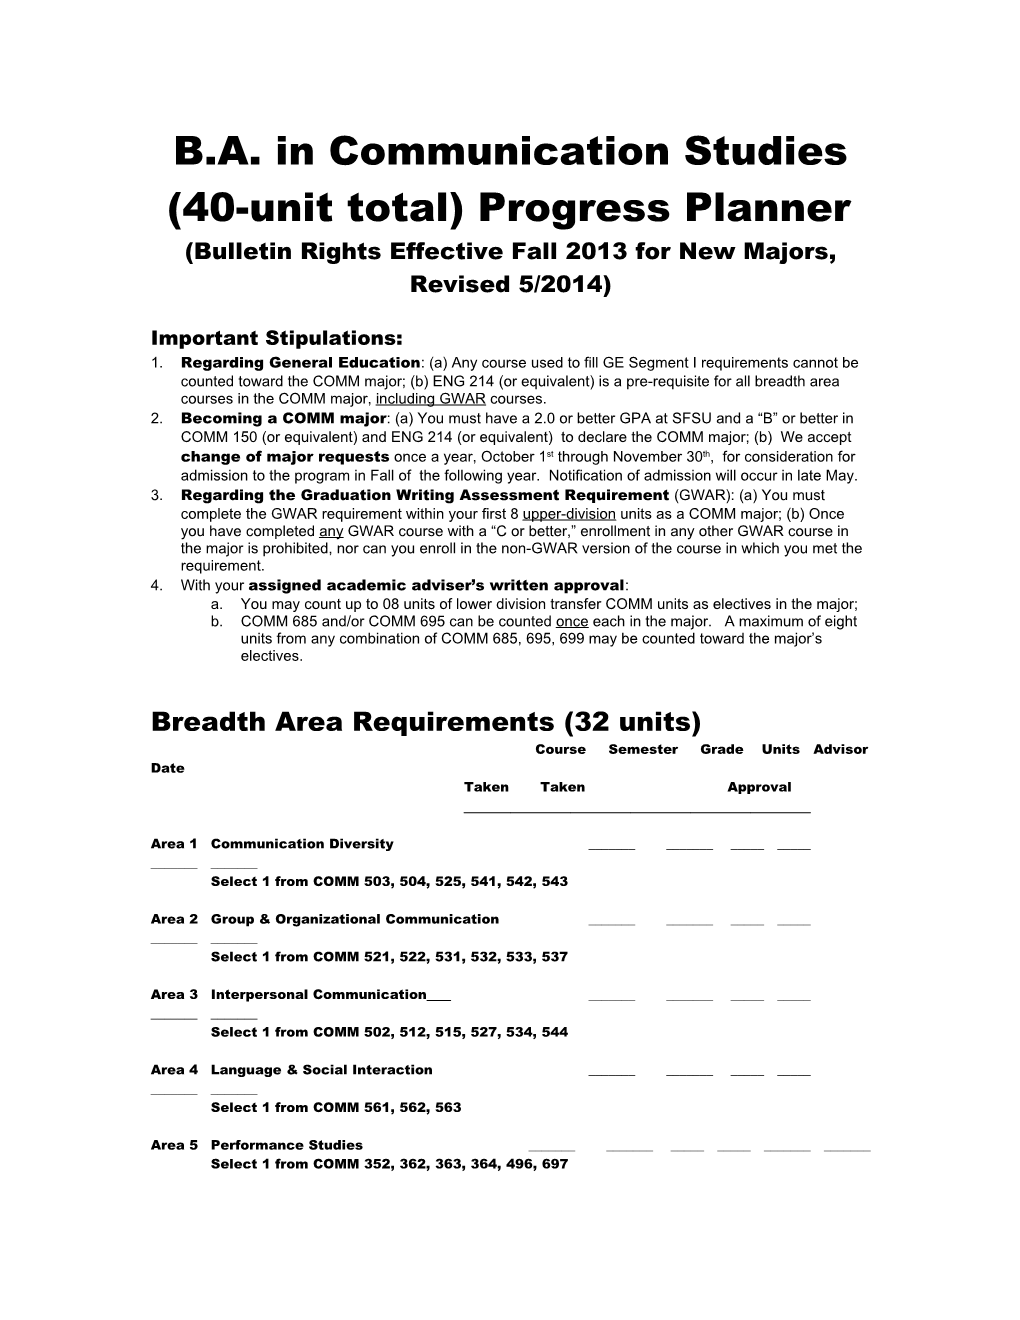 (40-Unit Total) Progress Planner